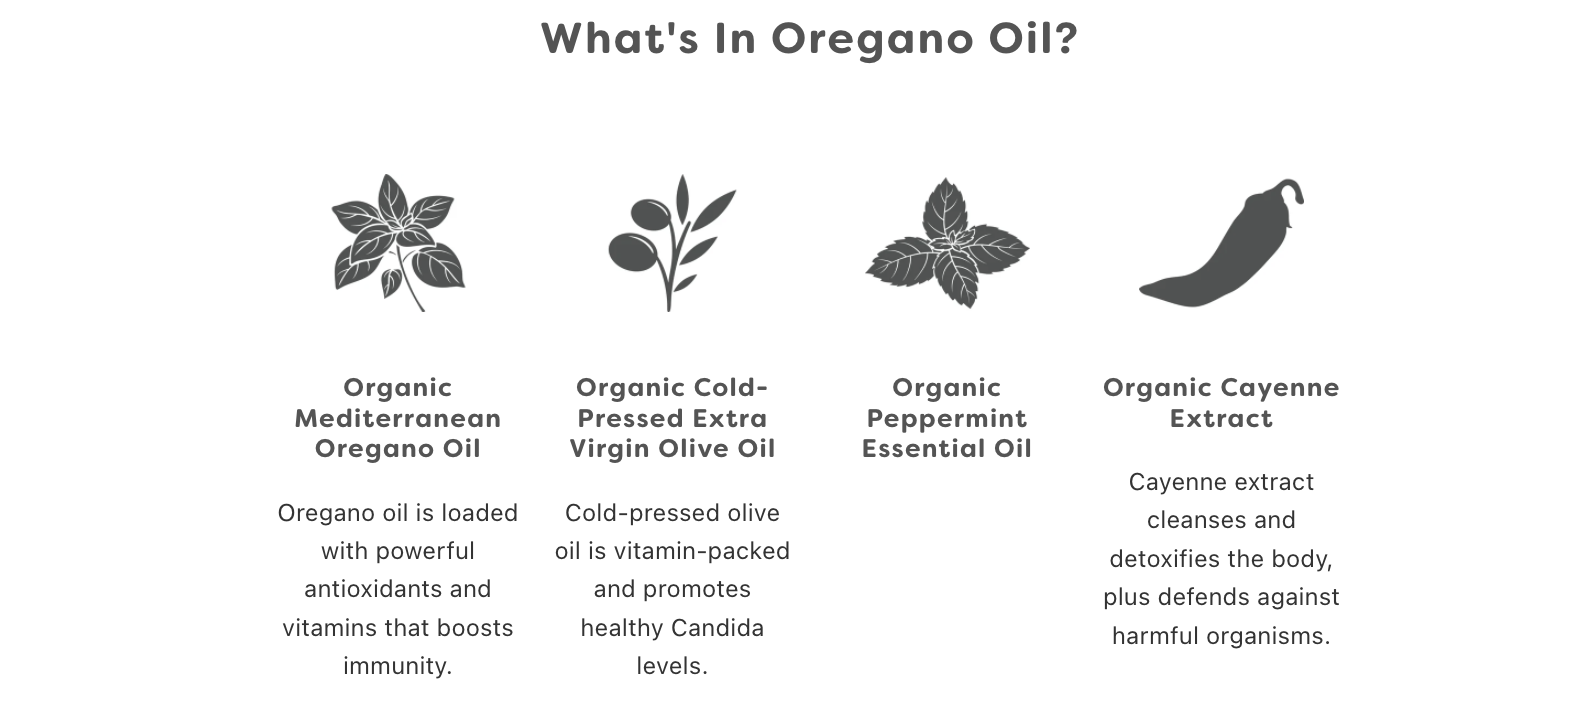 What's in Oregano Oil?